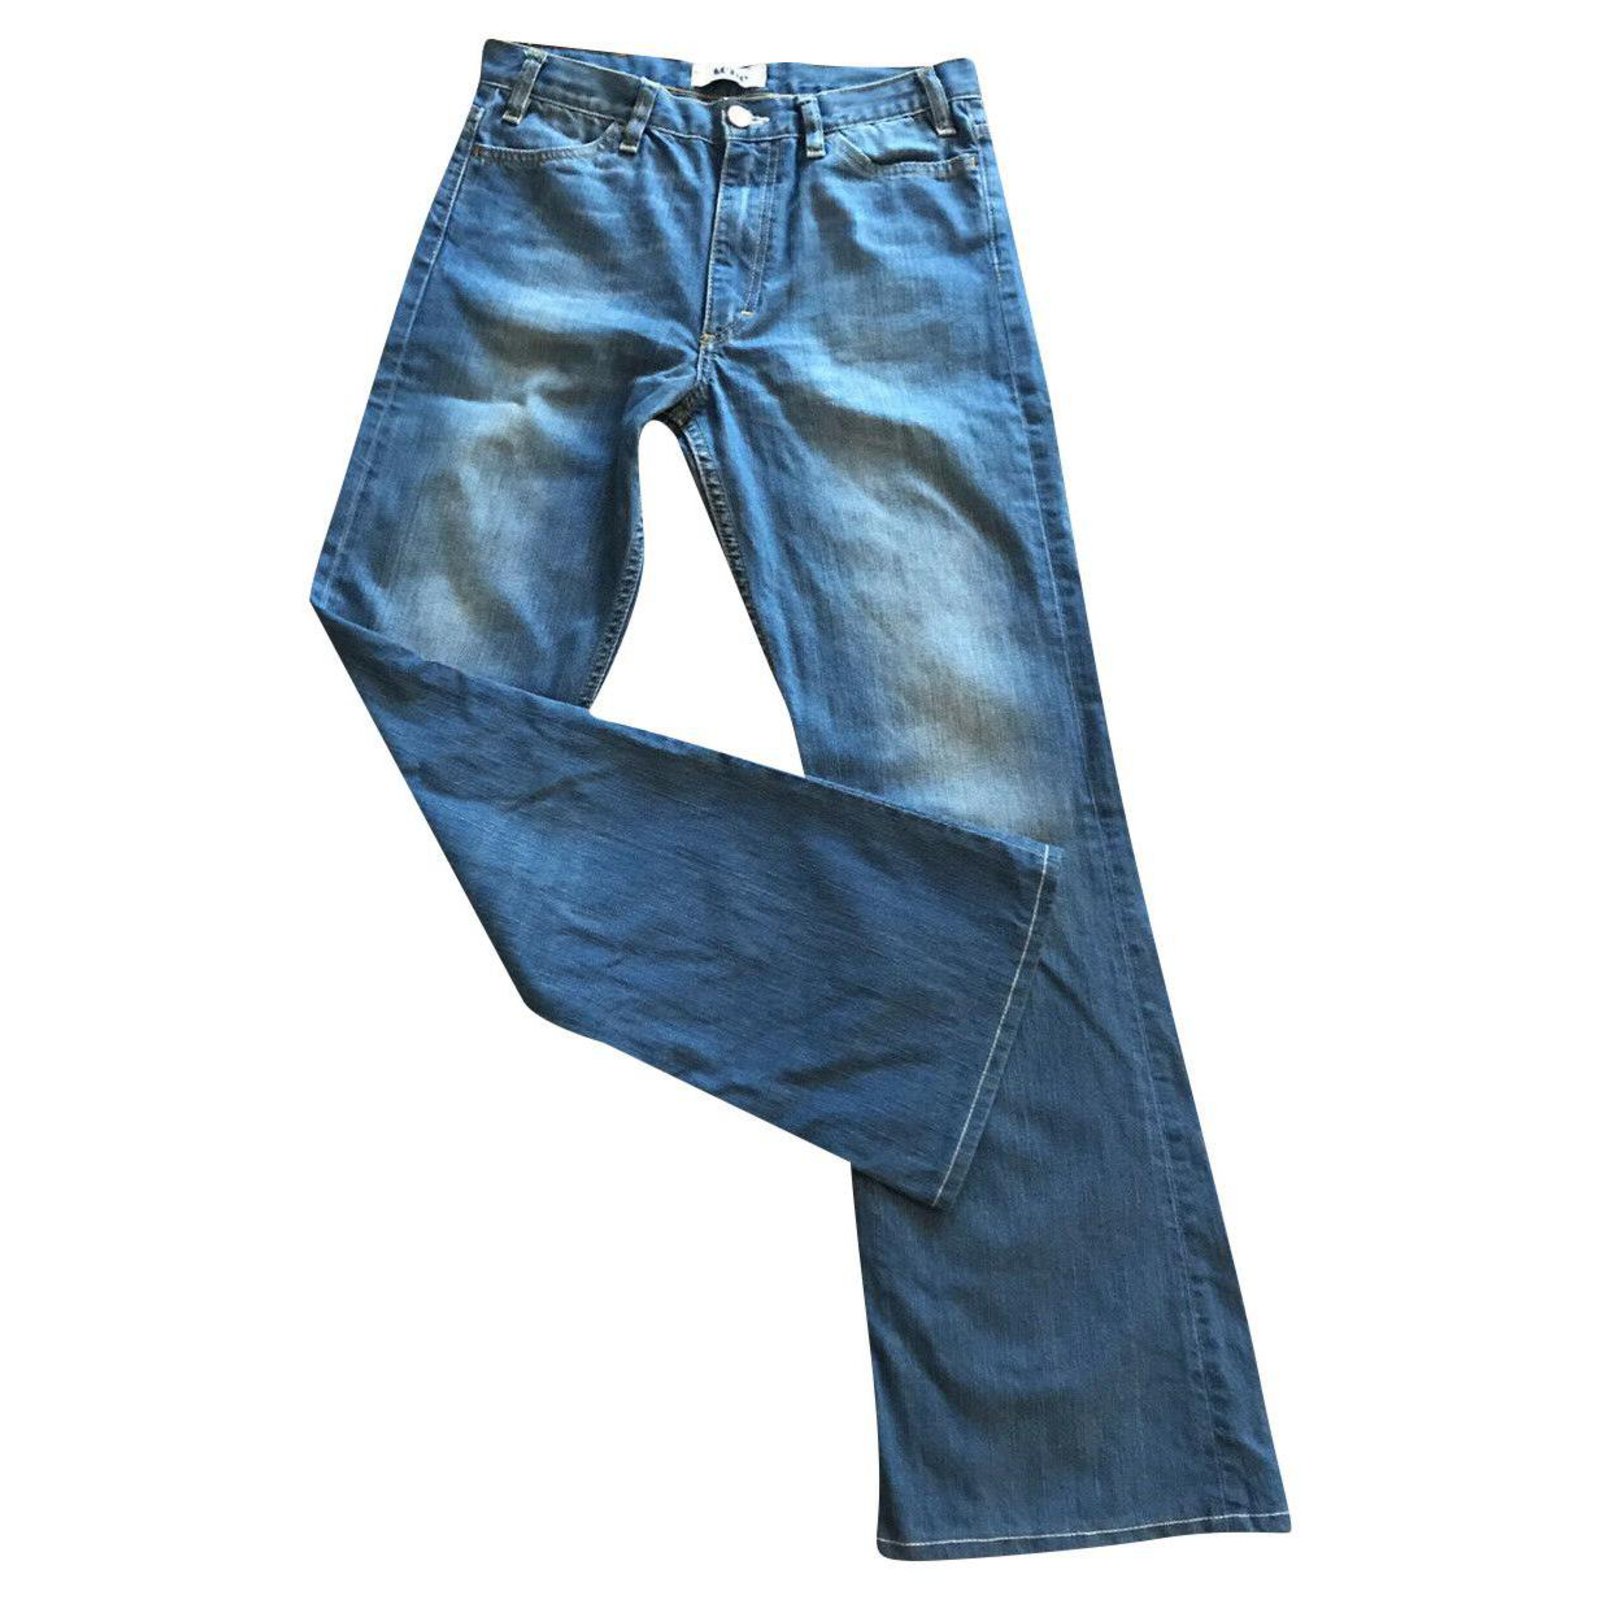 w28 jeans